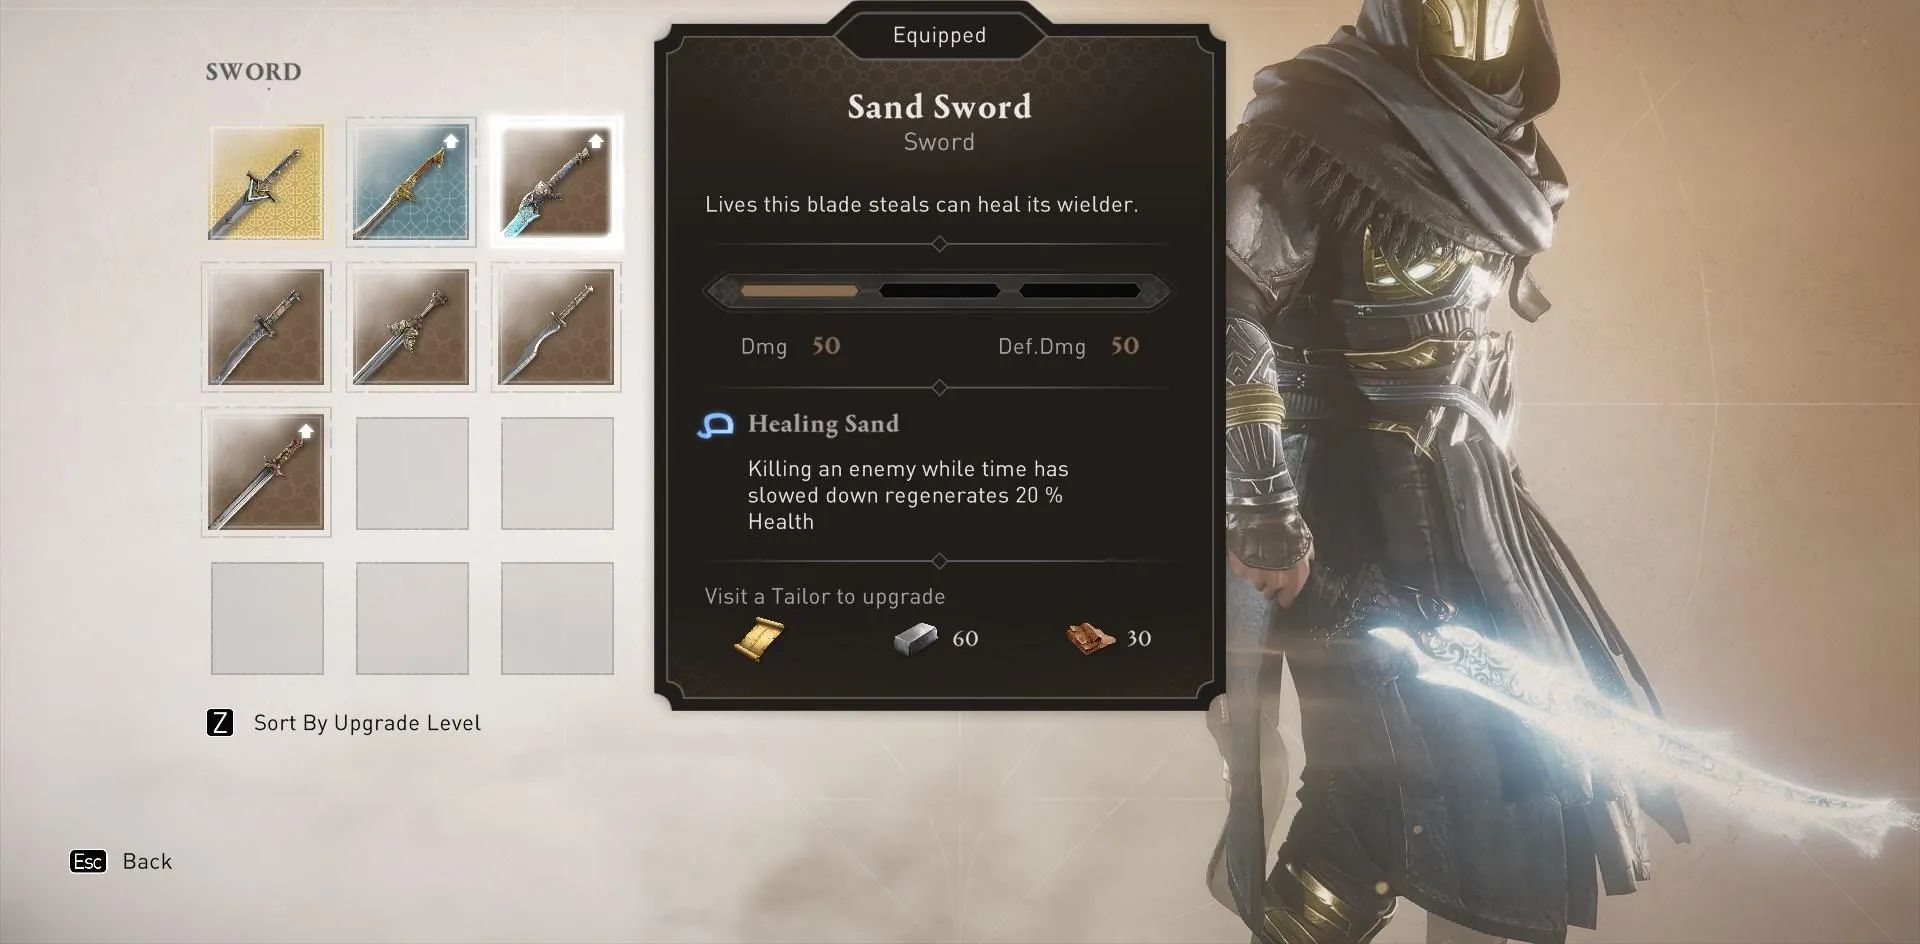 Sand Sword